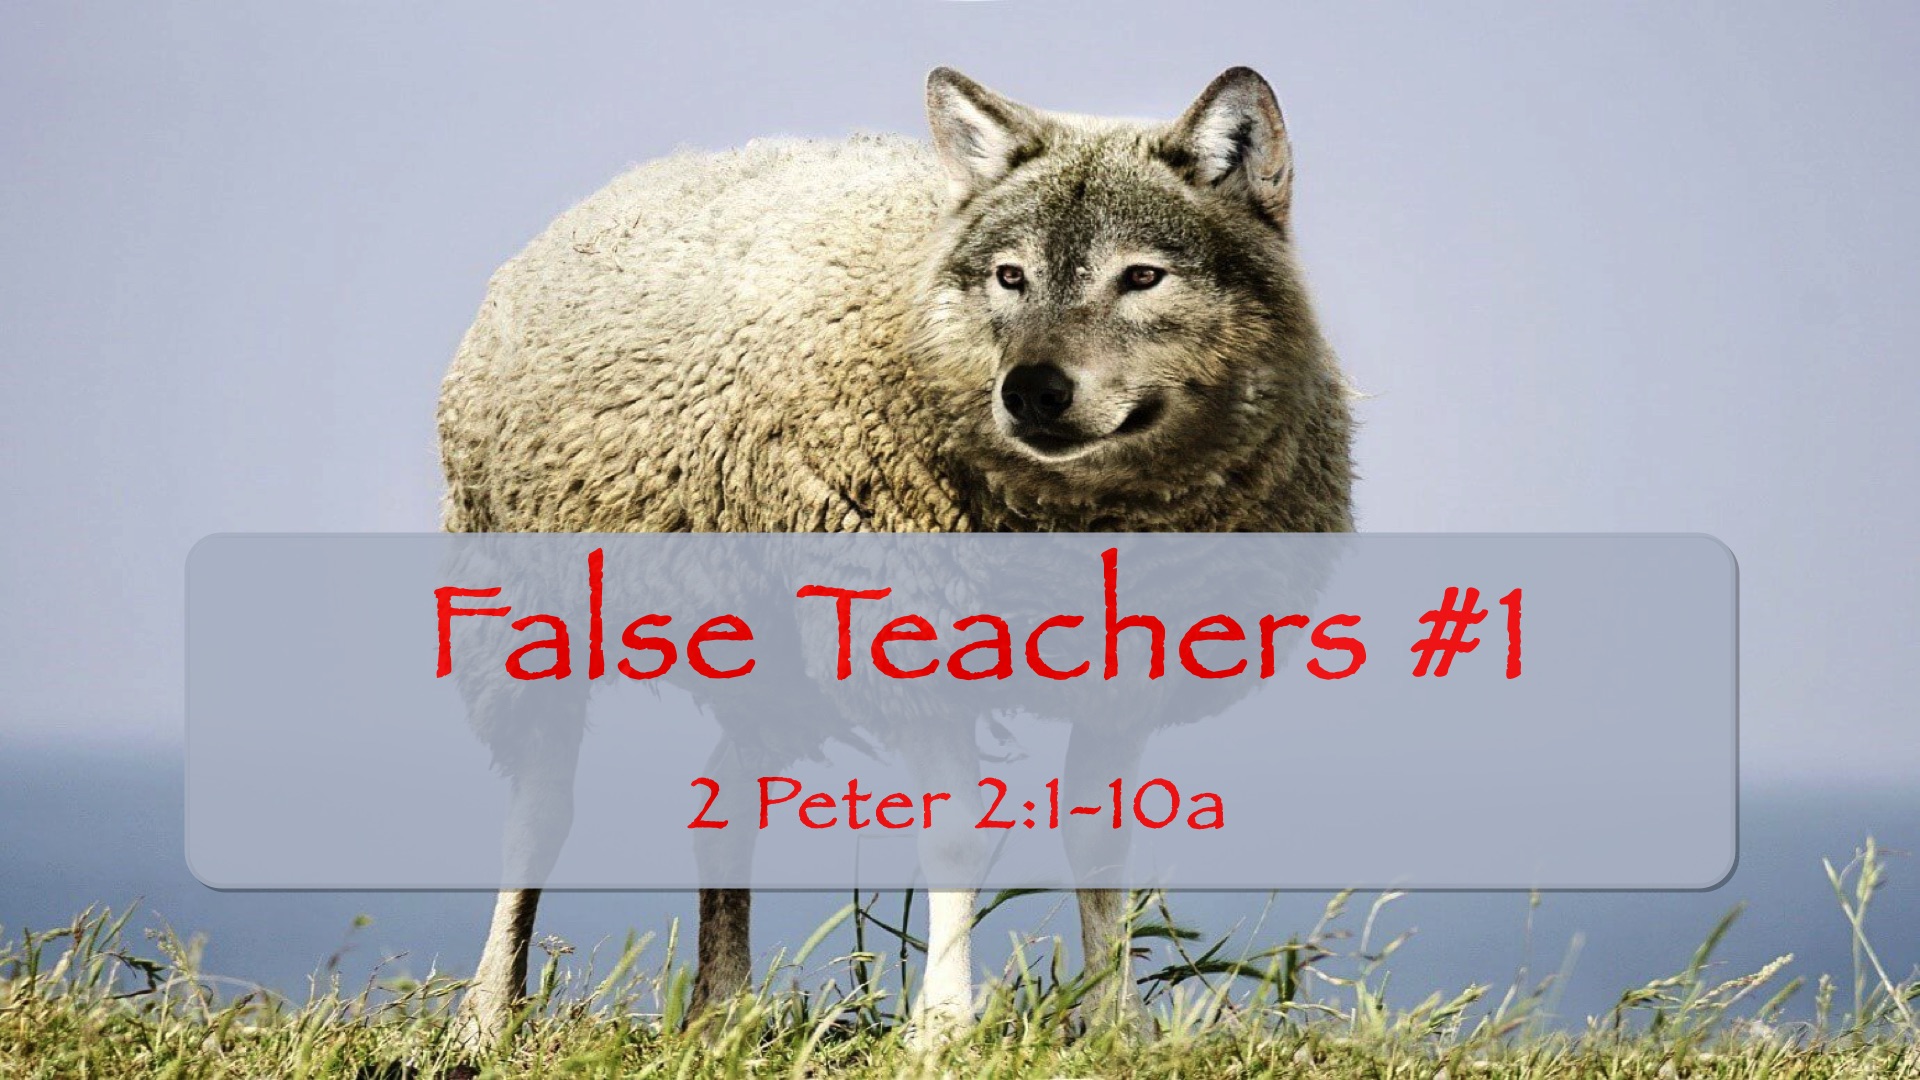 “False Teachers #1”